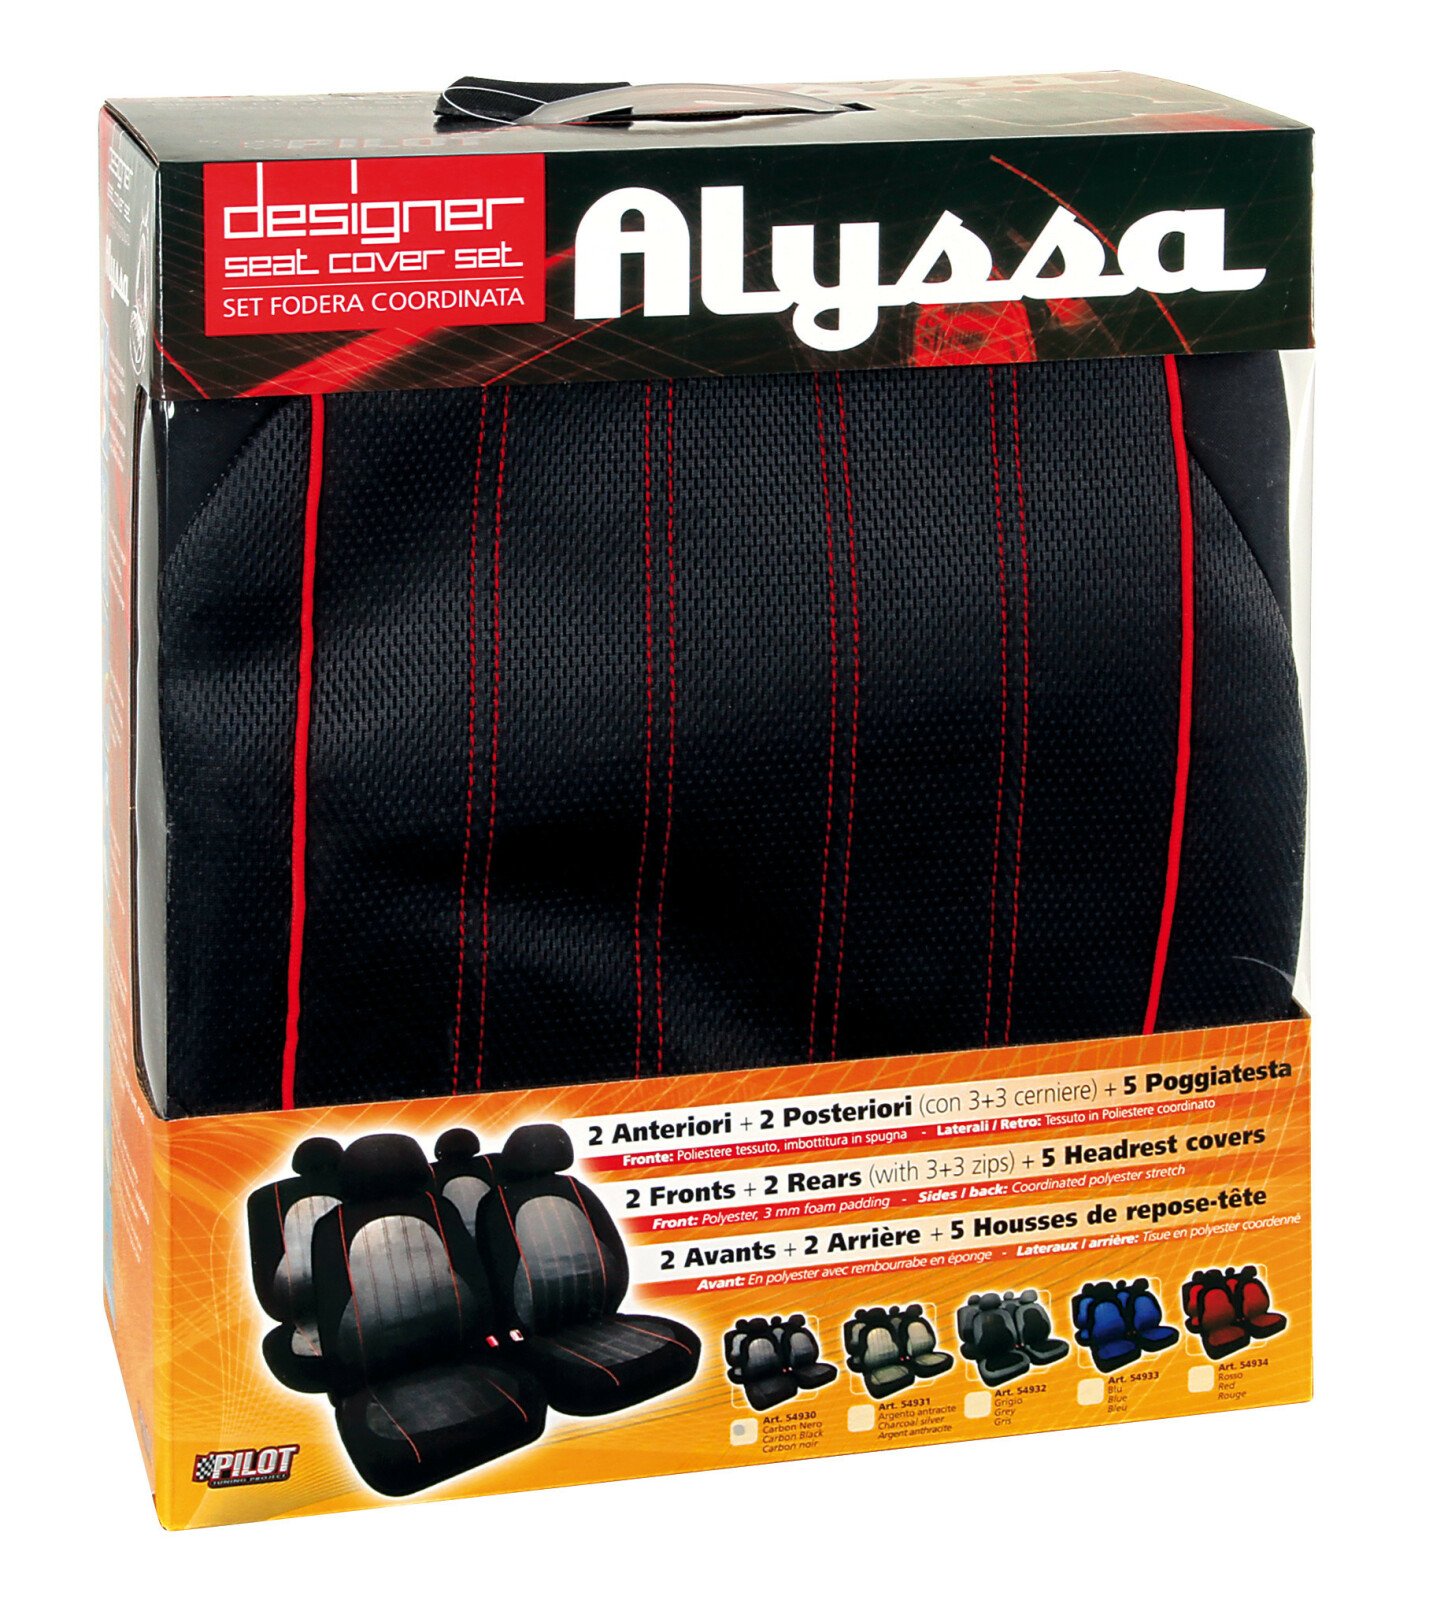 Alyssa seat covers 9pcs - Black thumb